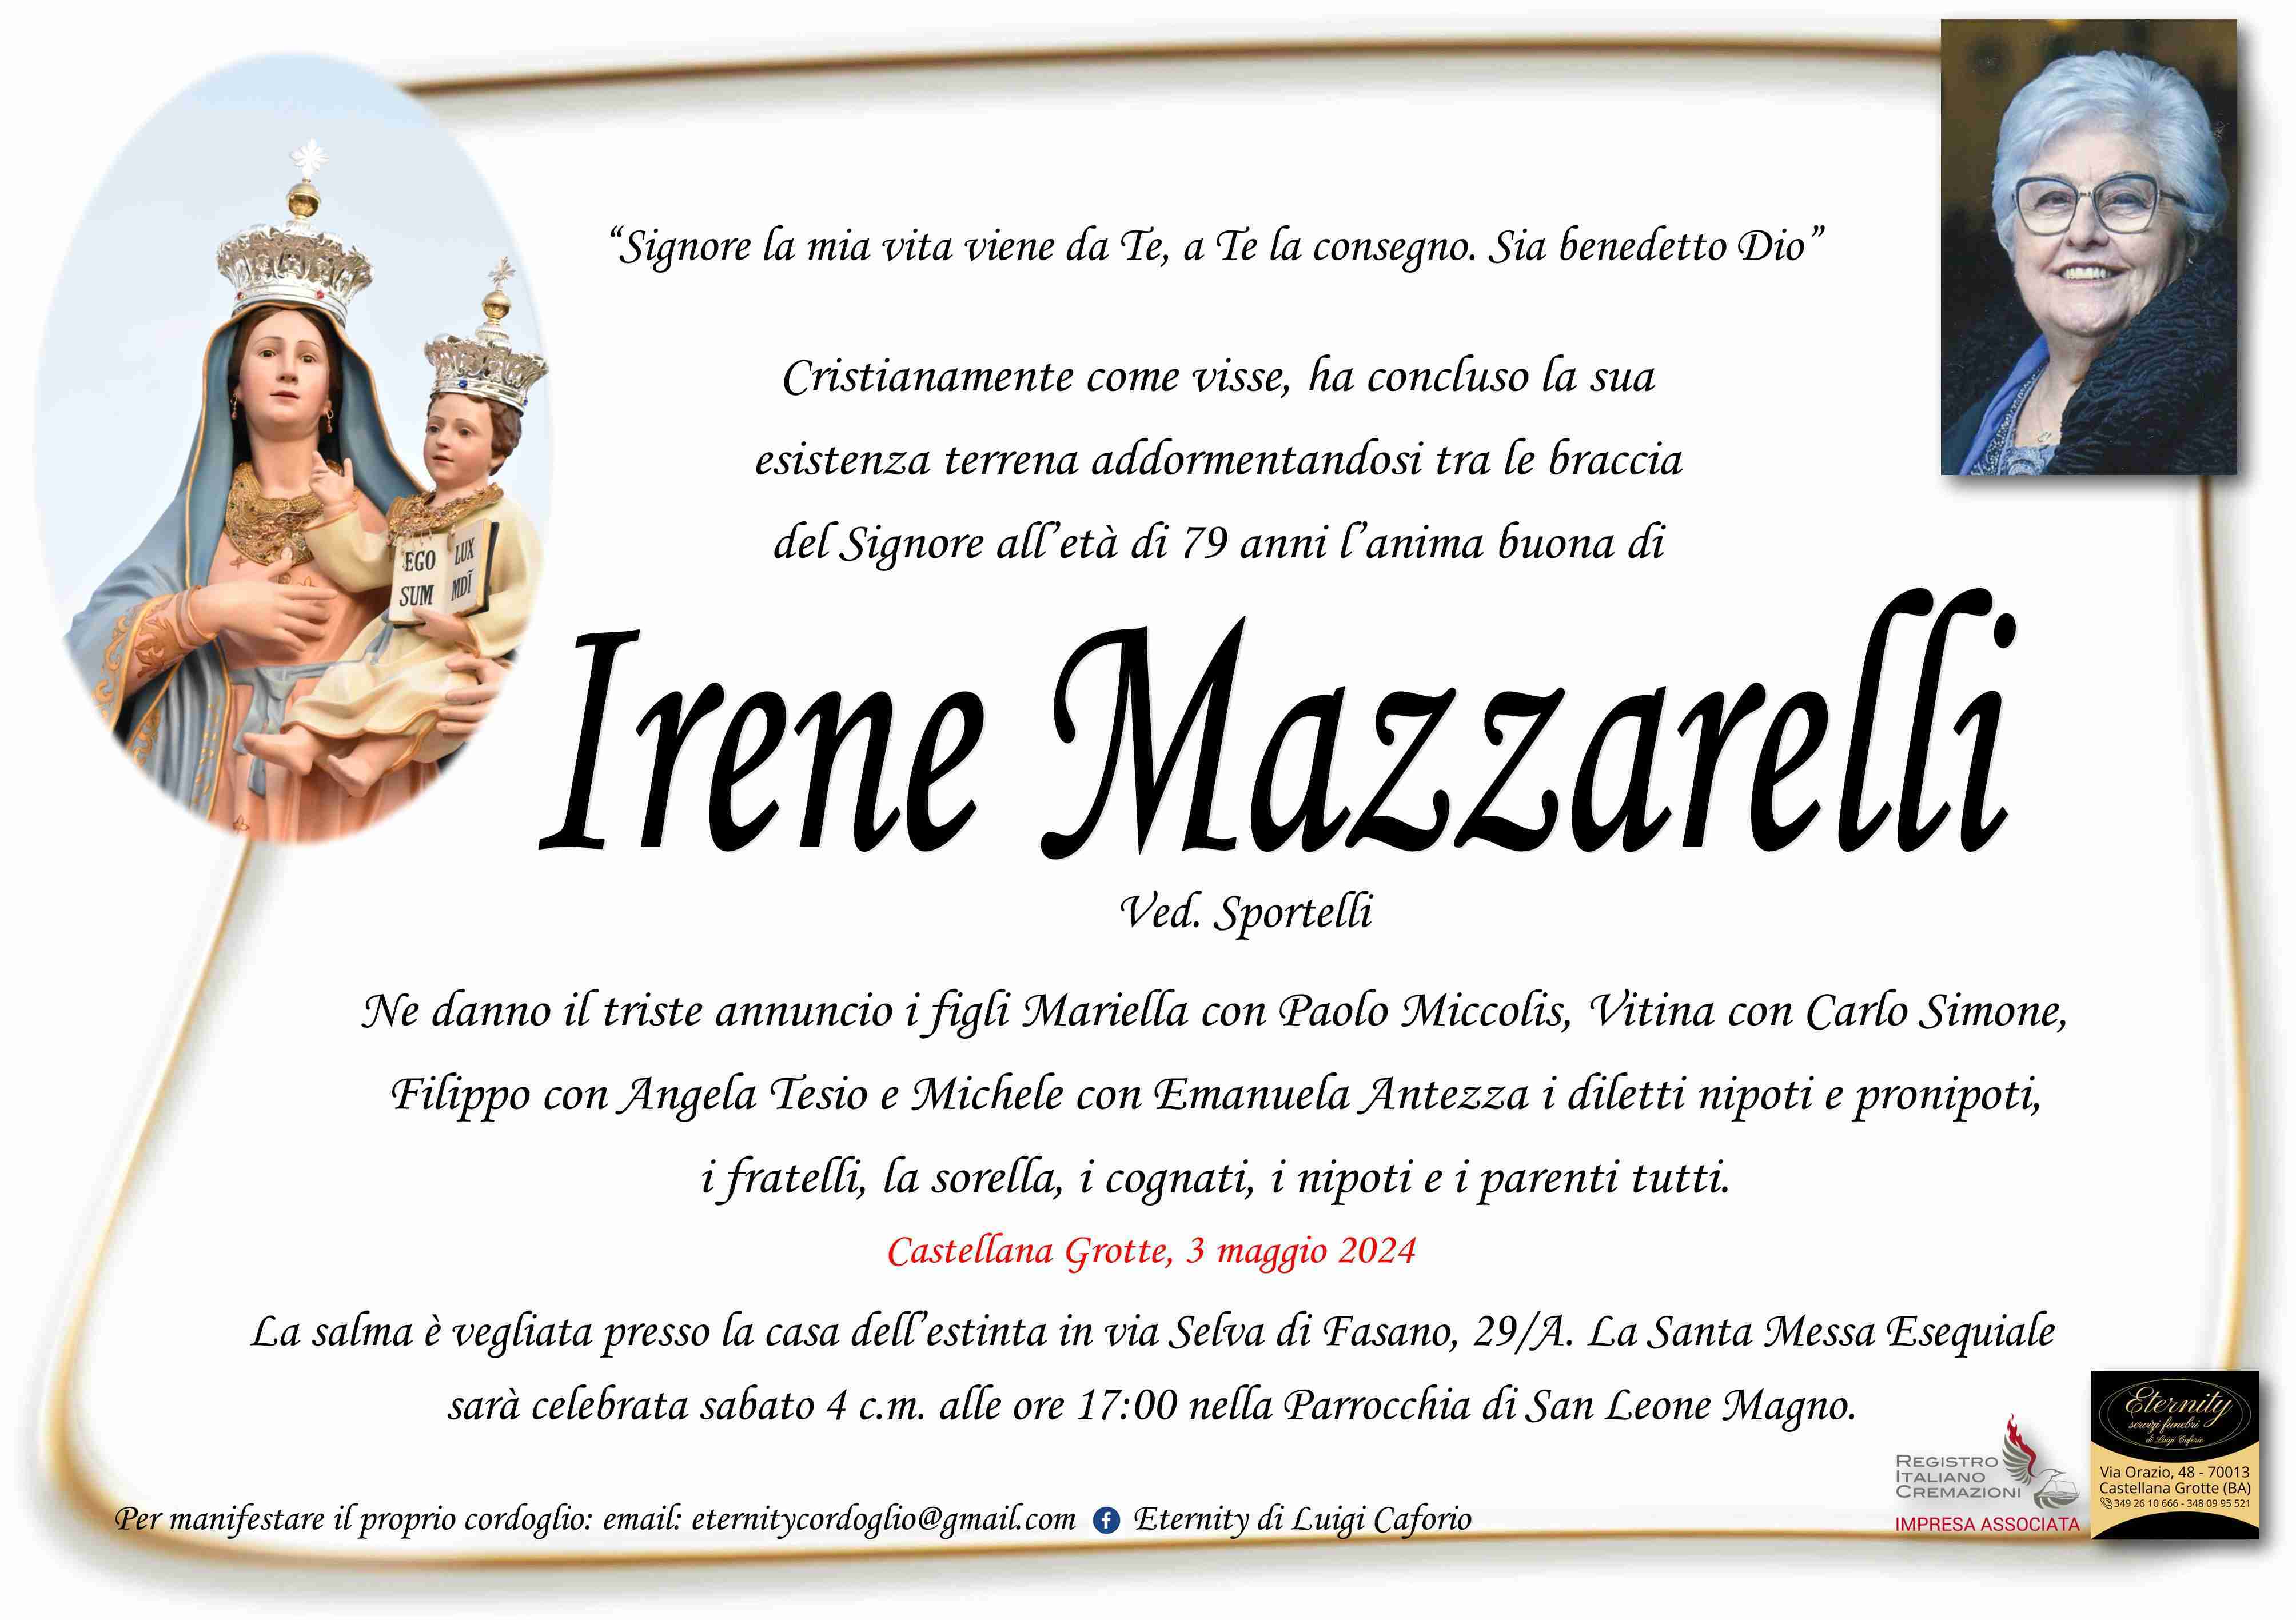 Irene Mazzarelli